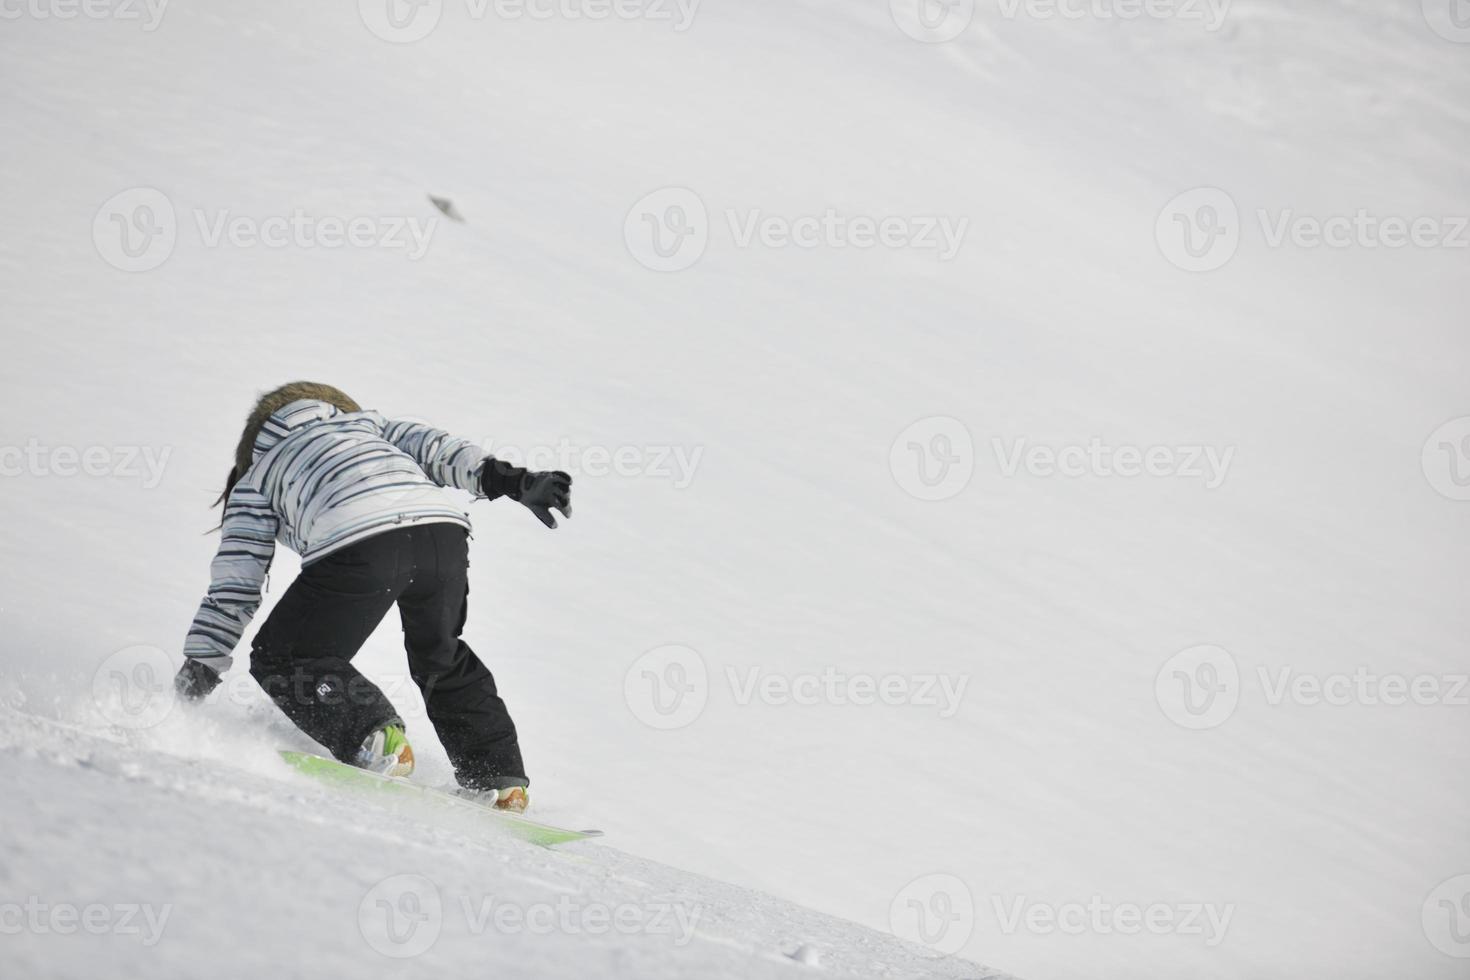 skieurs en montagne photo